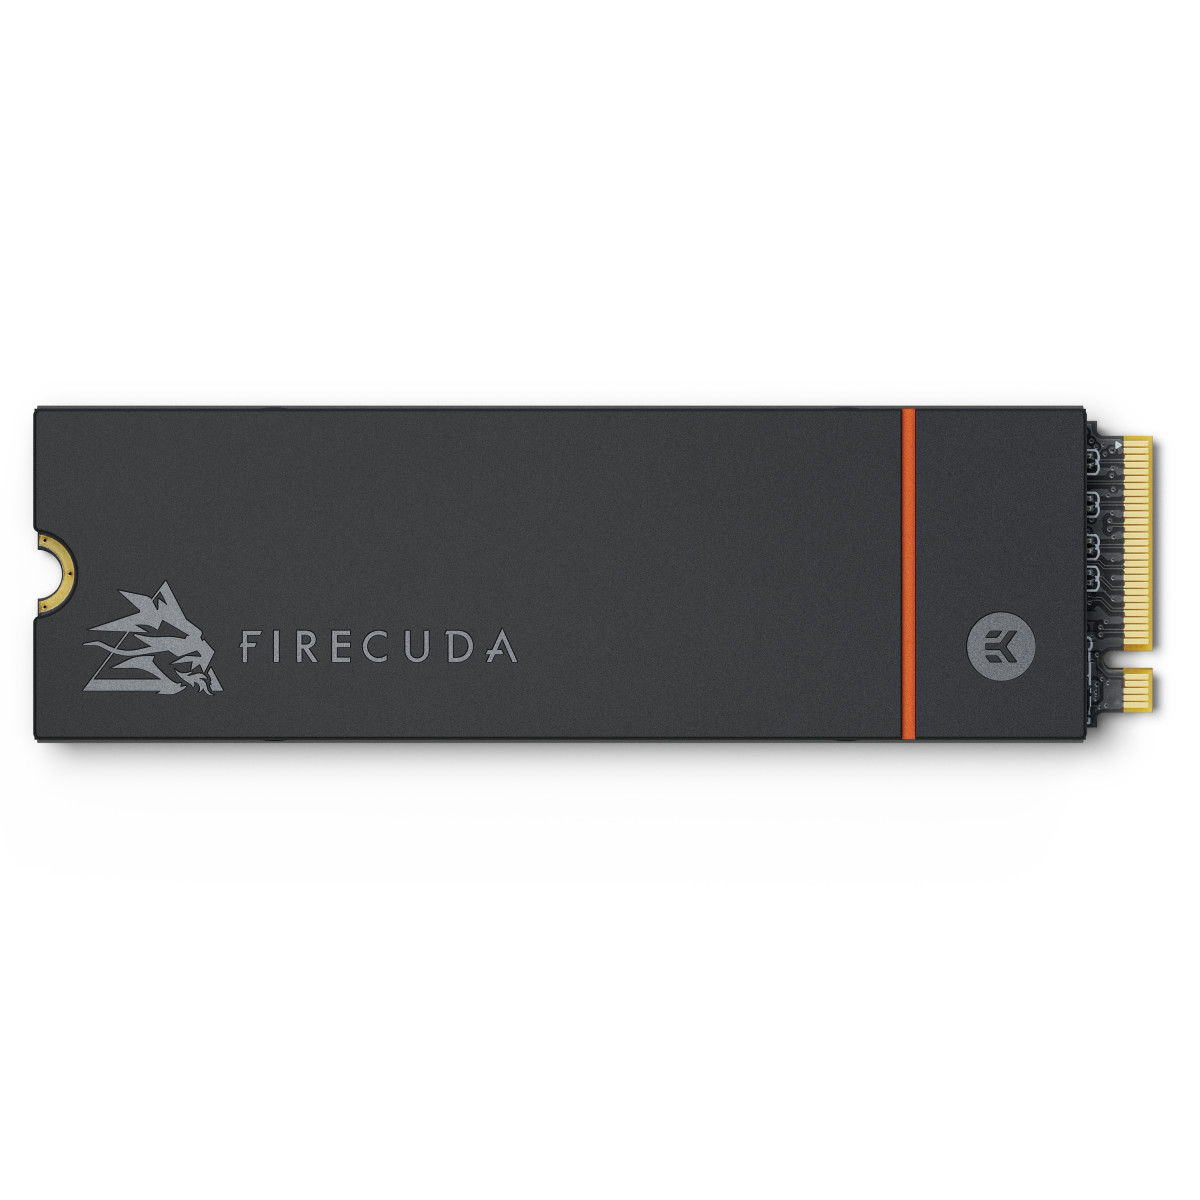 SSD Int 2TB FireCuda 530 w/hs PCIe M.2